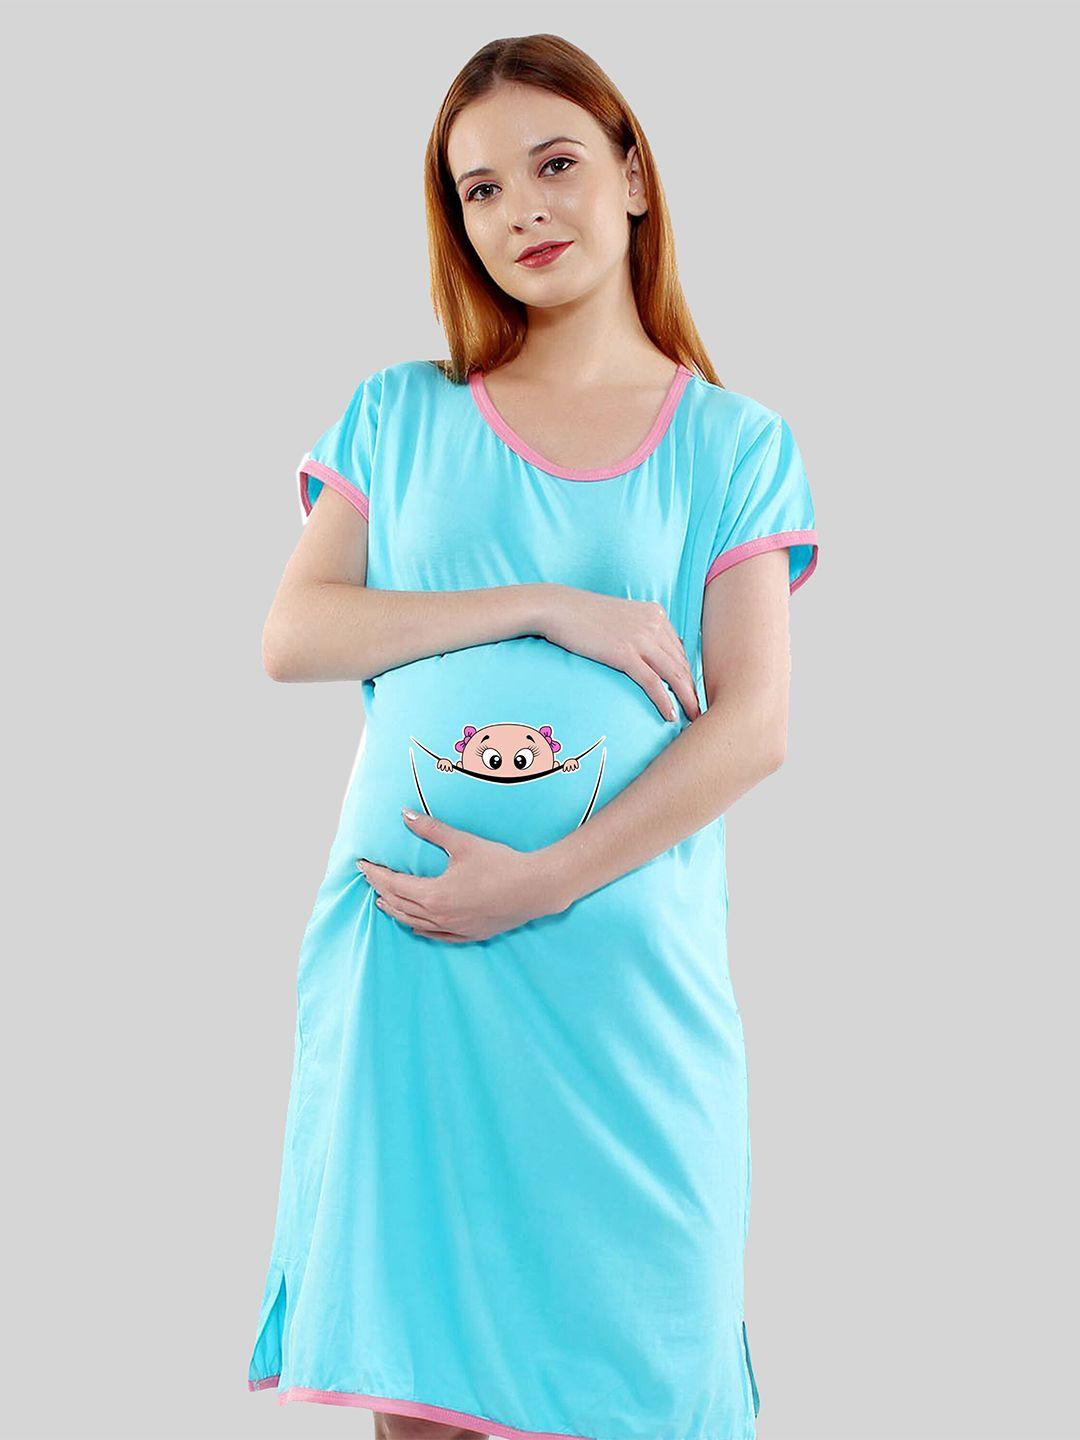 sillyboom printed pure cotton maternity t-shirt nightdress